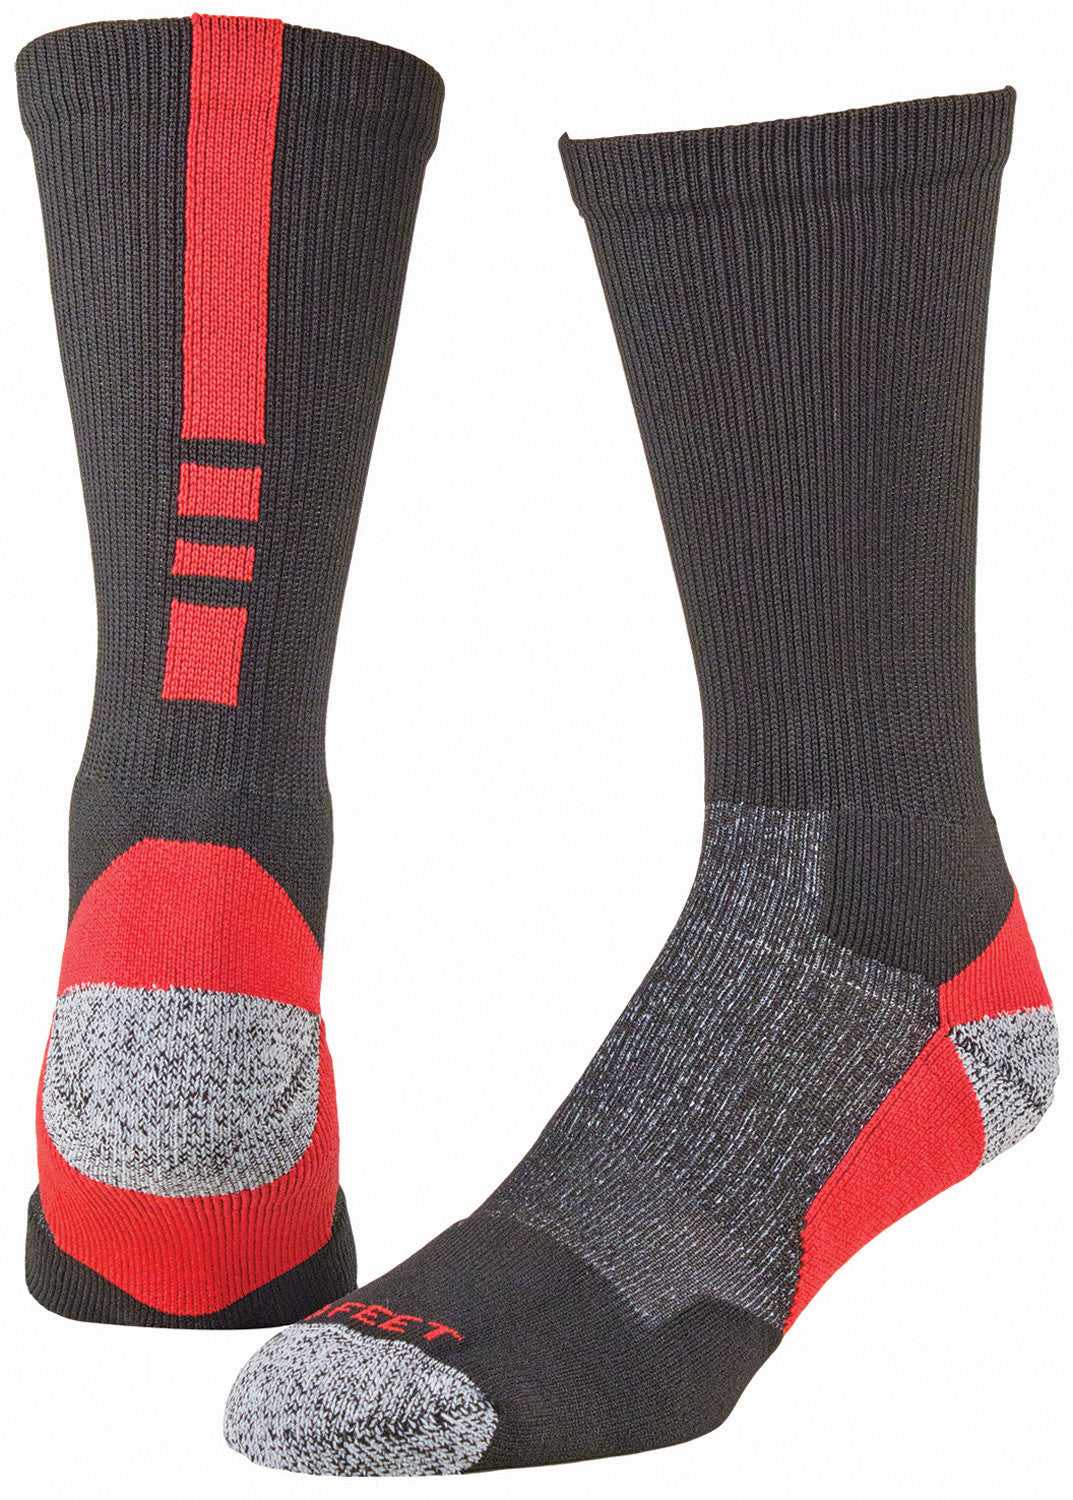 Pro Feet 238 Pro Feet Performance Shooter 2.0 Socks - Black Red - HIT a Double